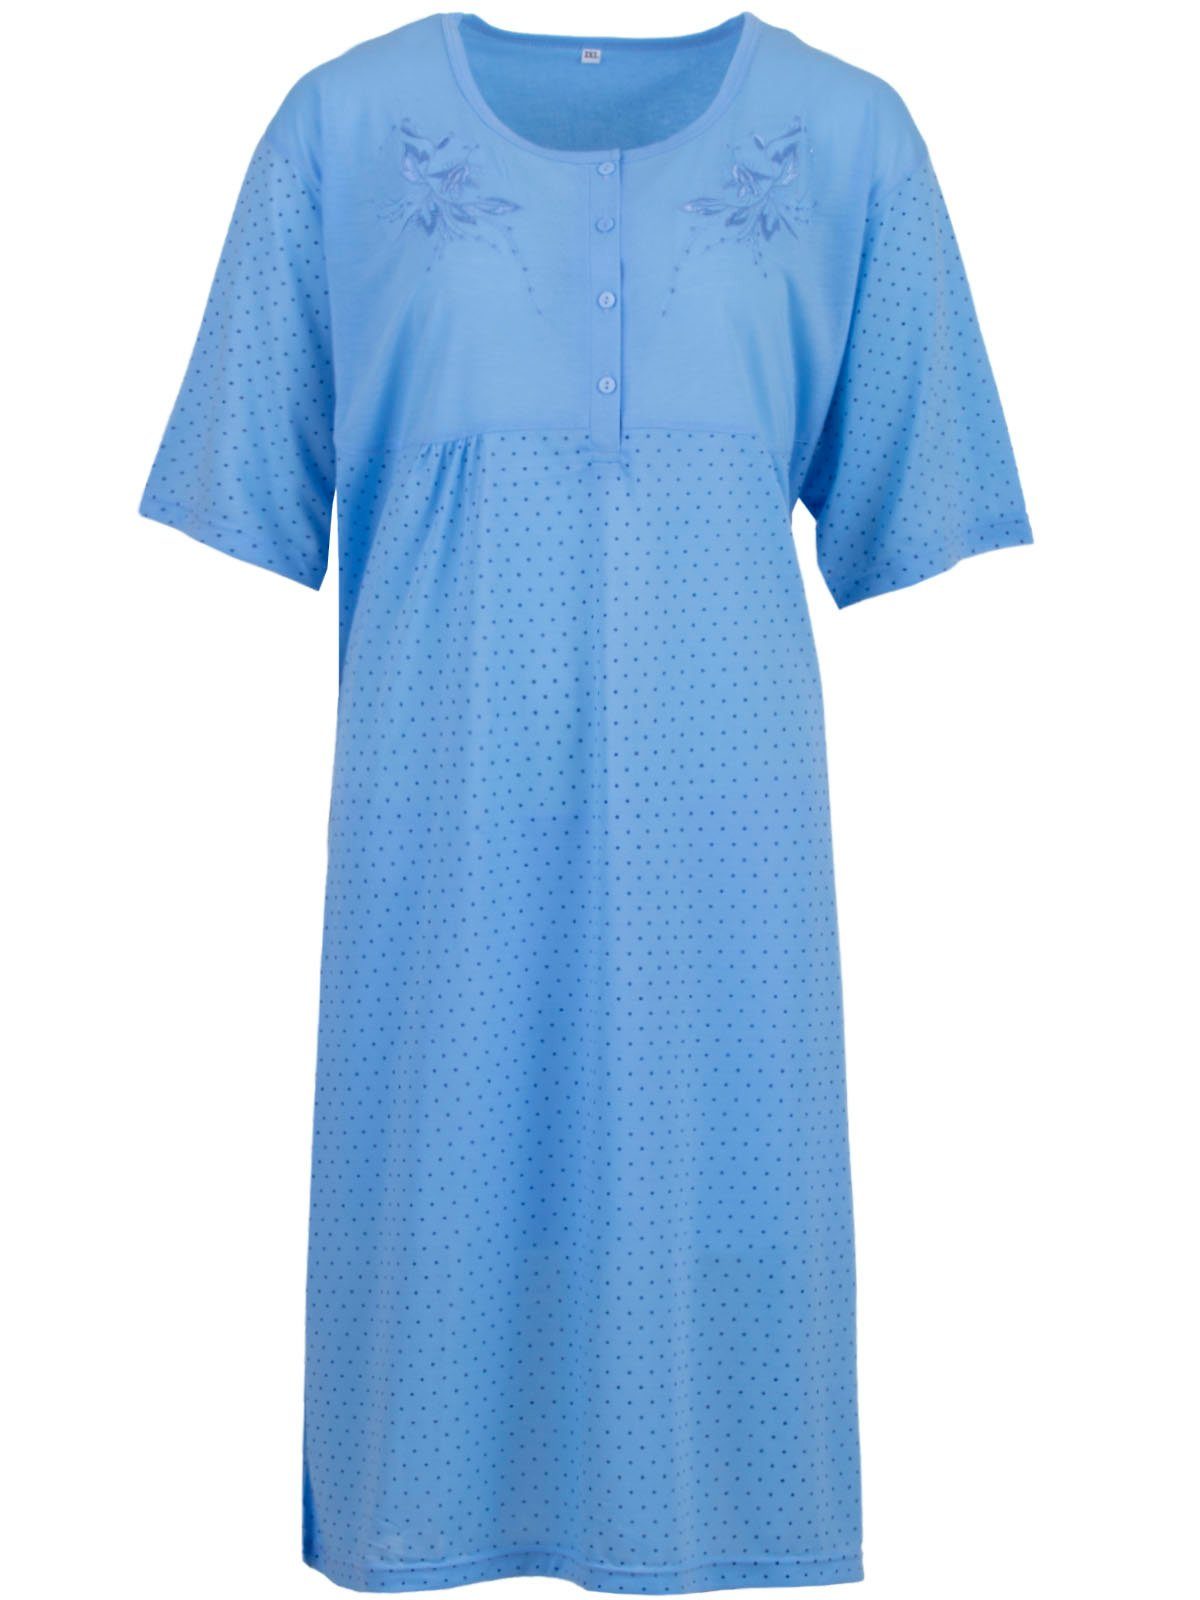 Lucky Nachthemd Nachthemd Kurzarm - Punkte 3XL-6XL blau